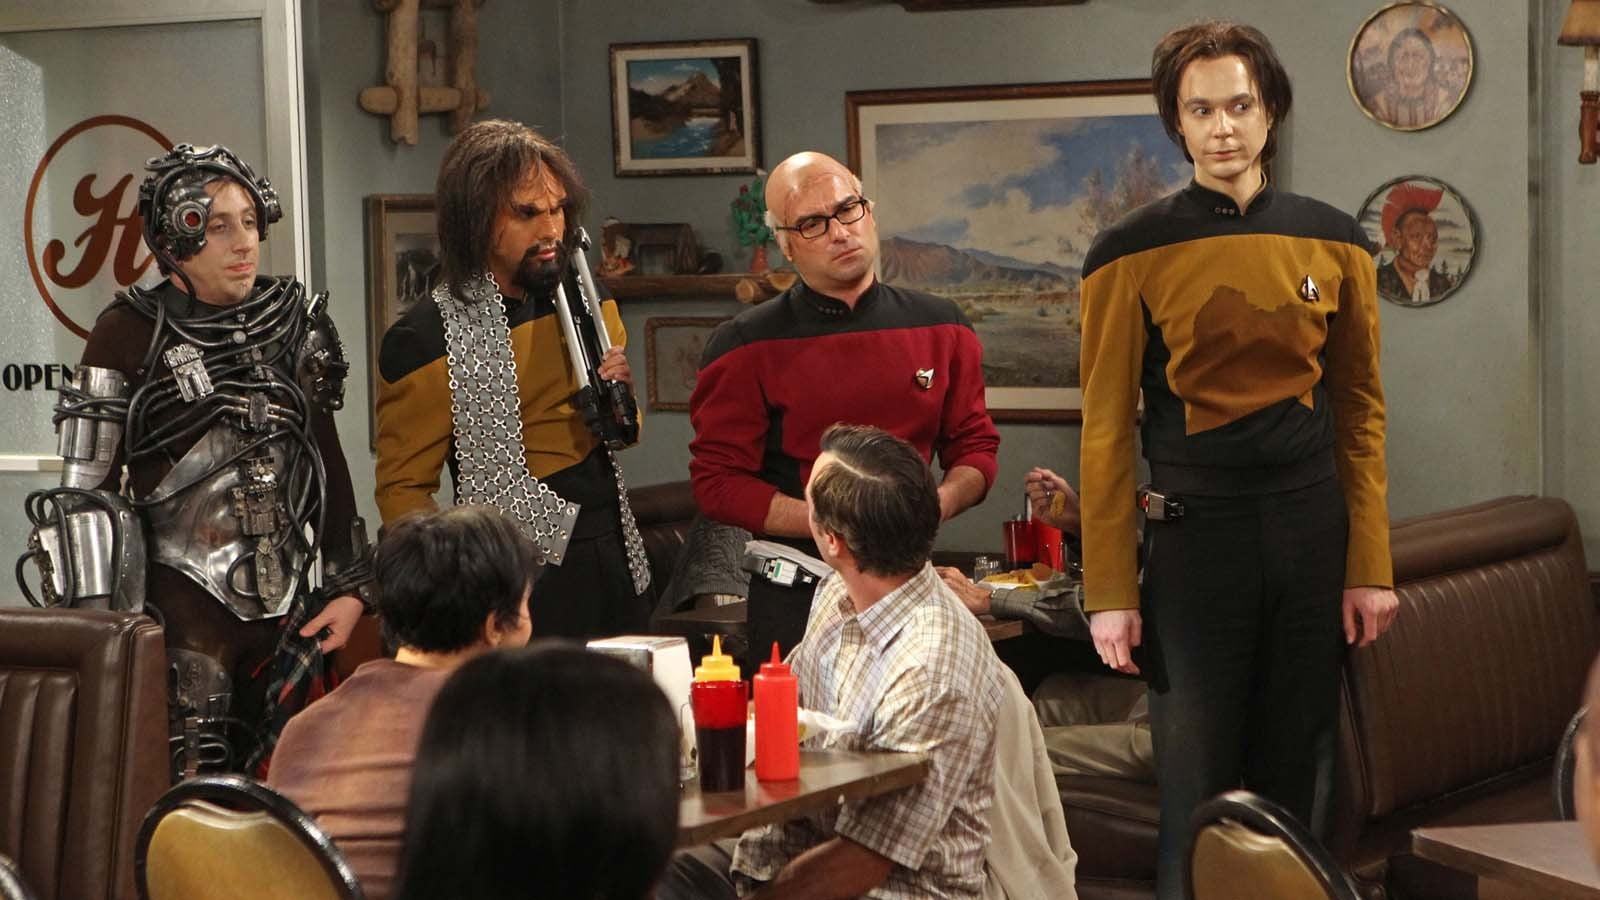 men's red and black shirt, The Big Bang Theory, Sheldon Cooper, costumes, Star Trek